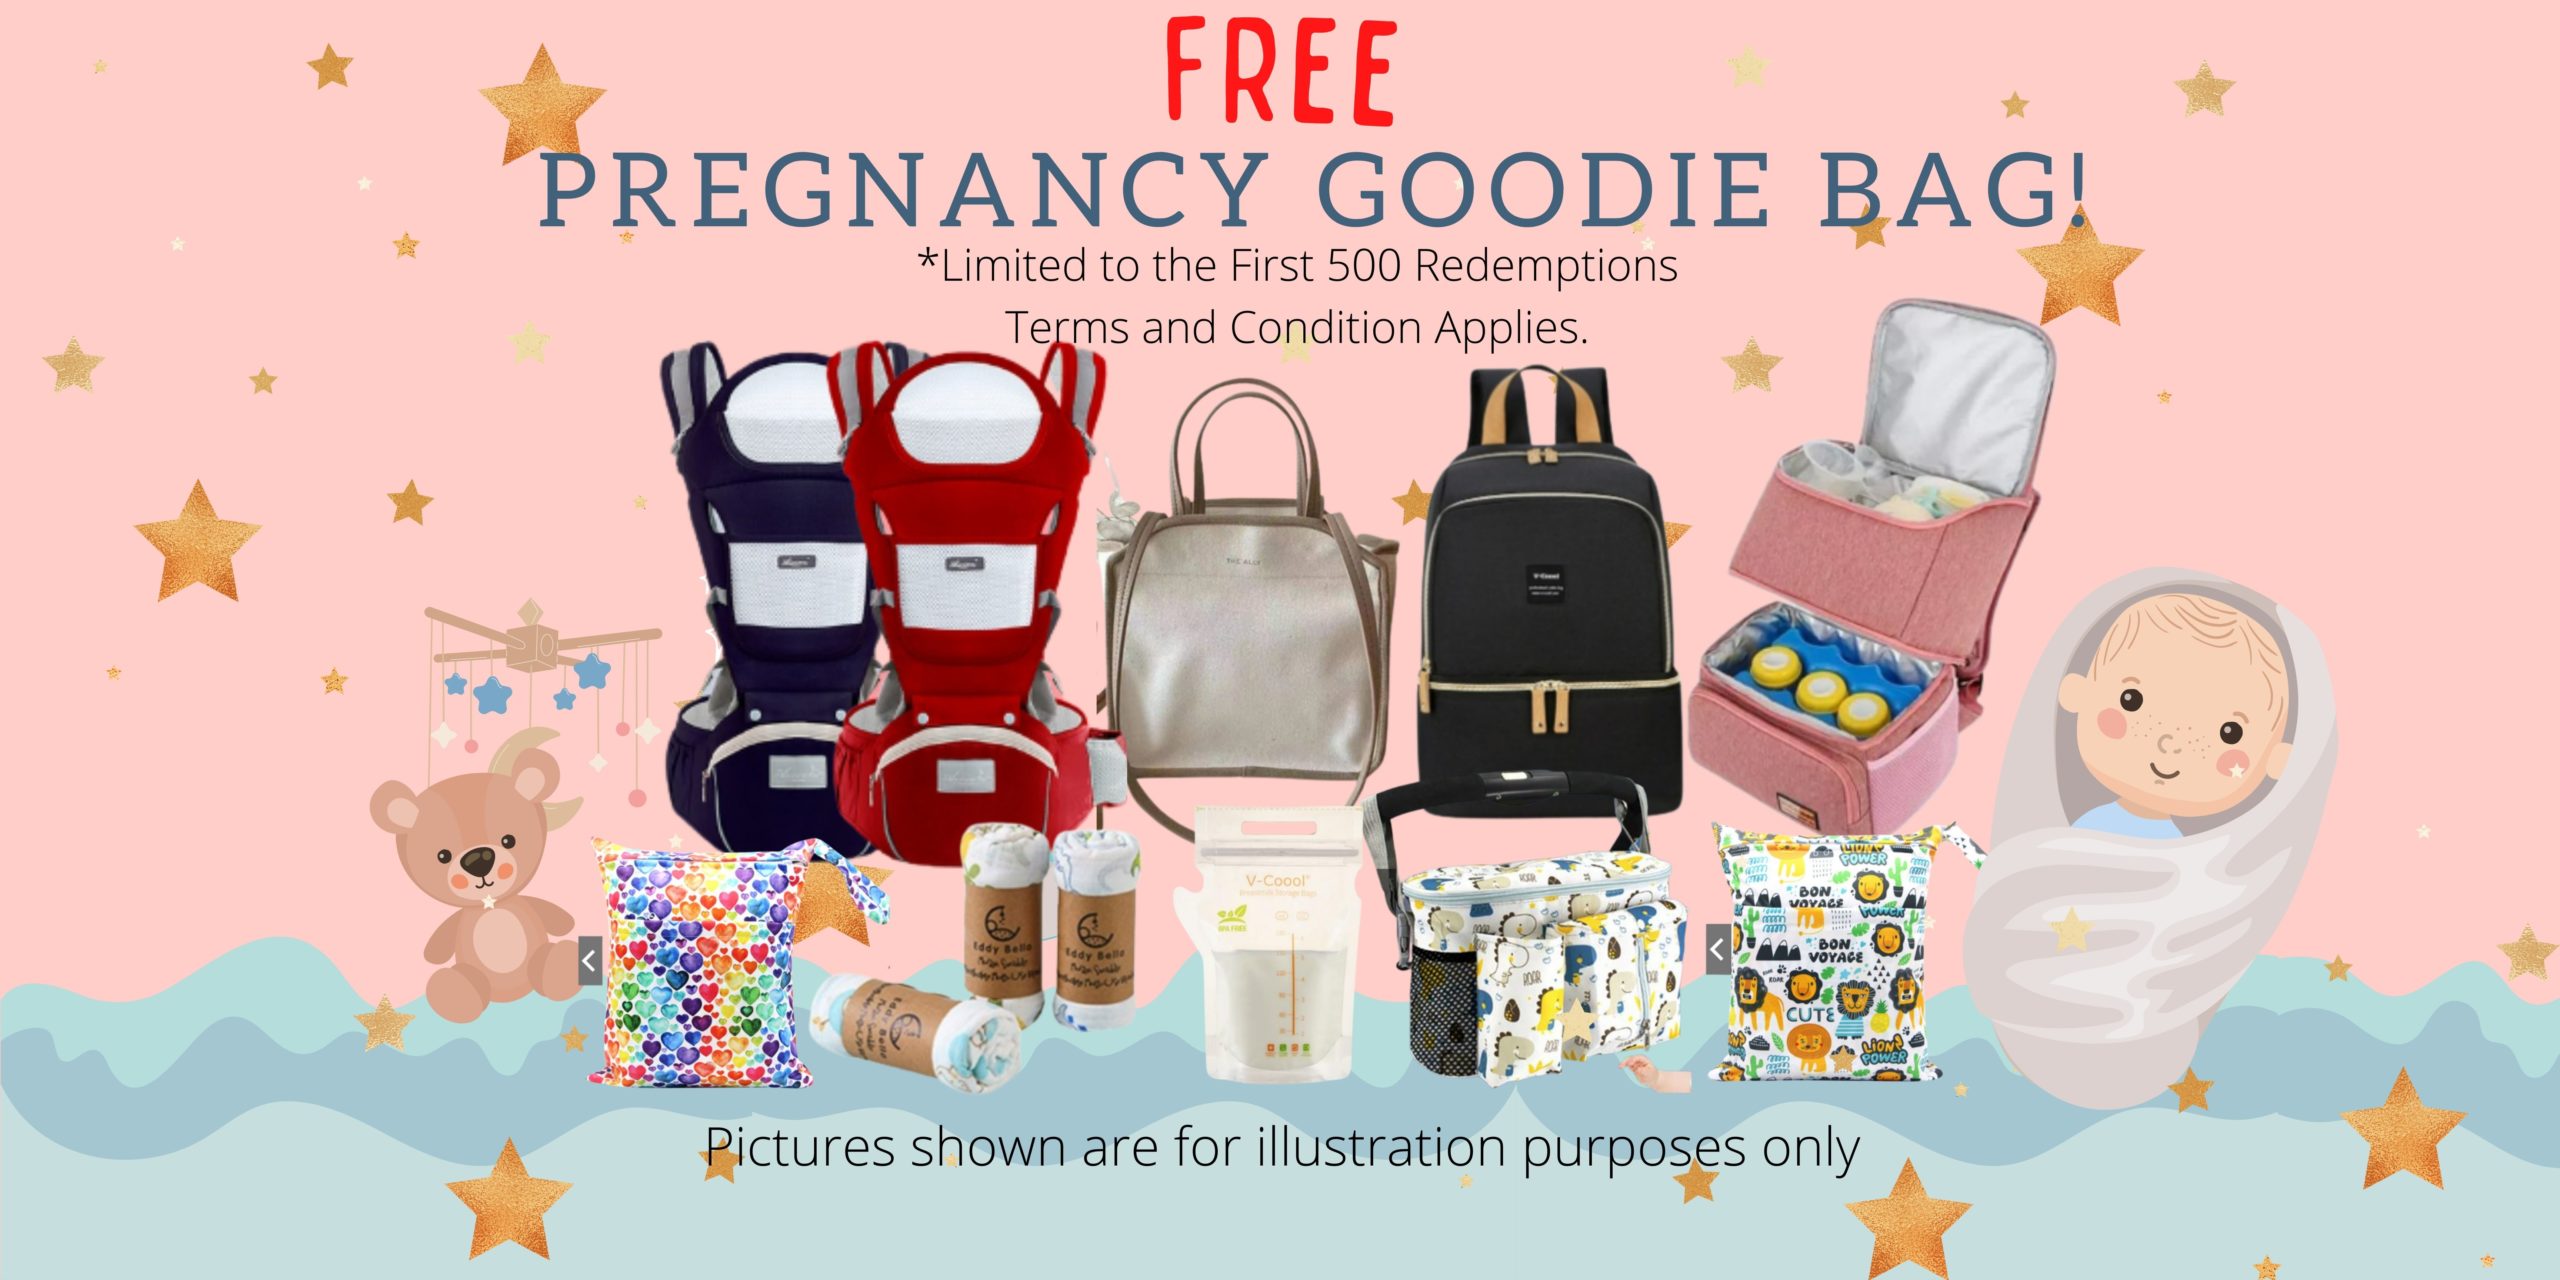 Grab your Pregnancy Goodies Bag — Engage